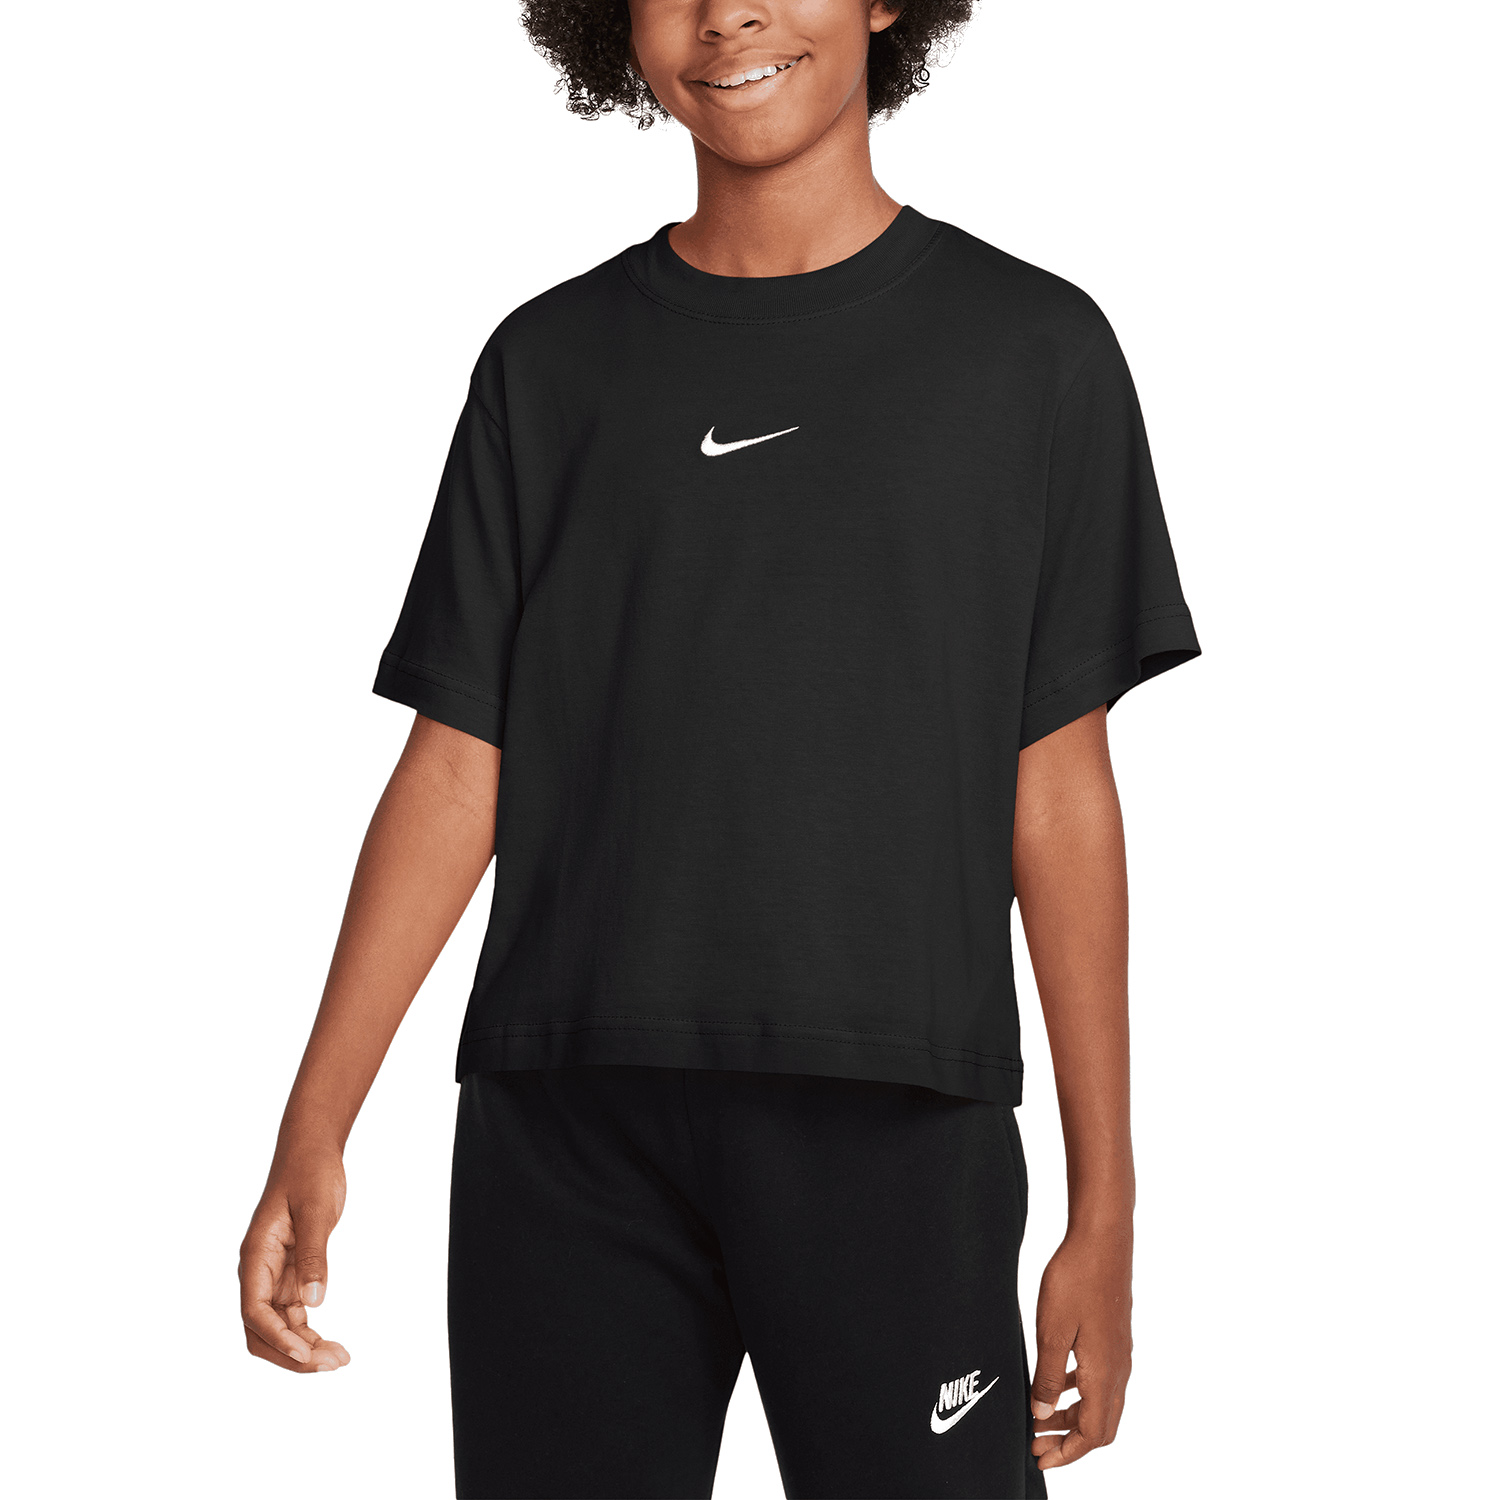 Nike Swoosh Maglietta Bambina - Black/White